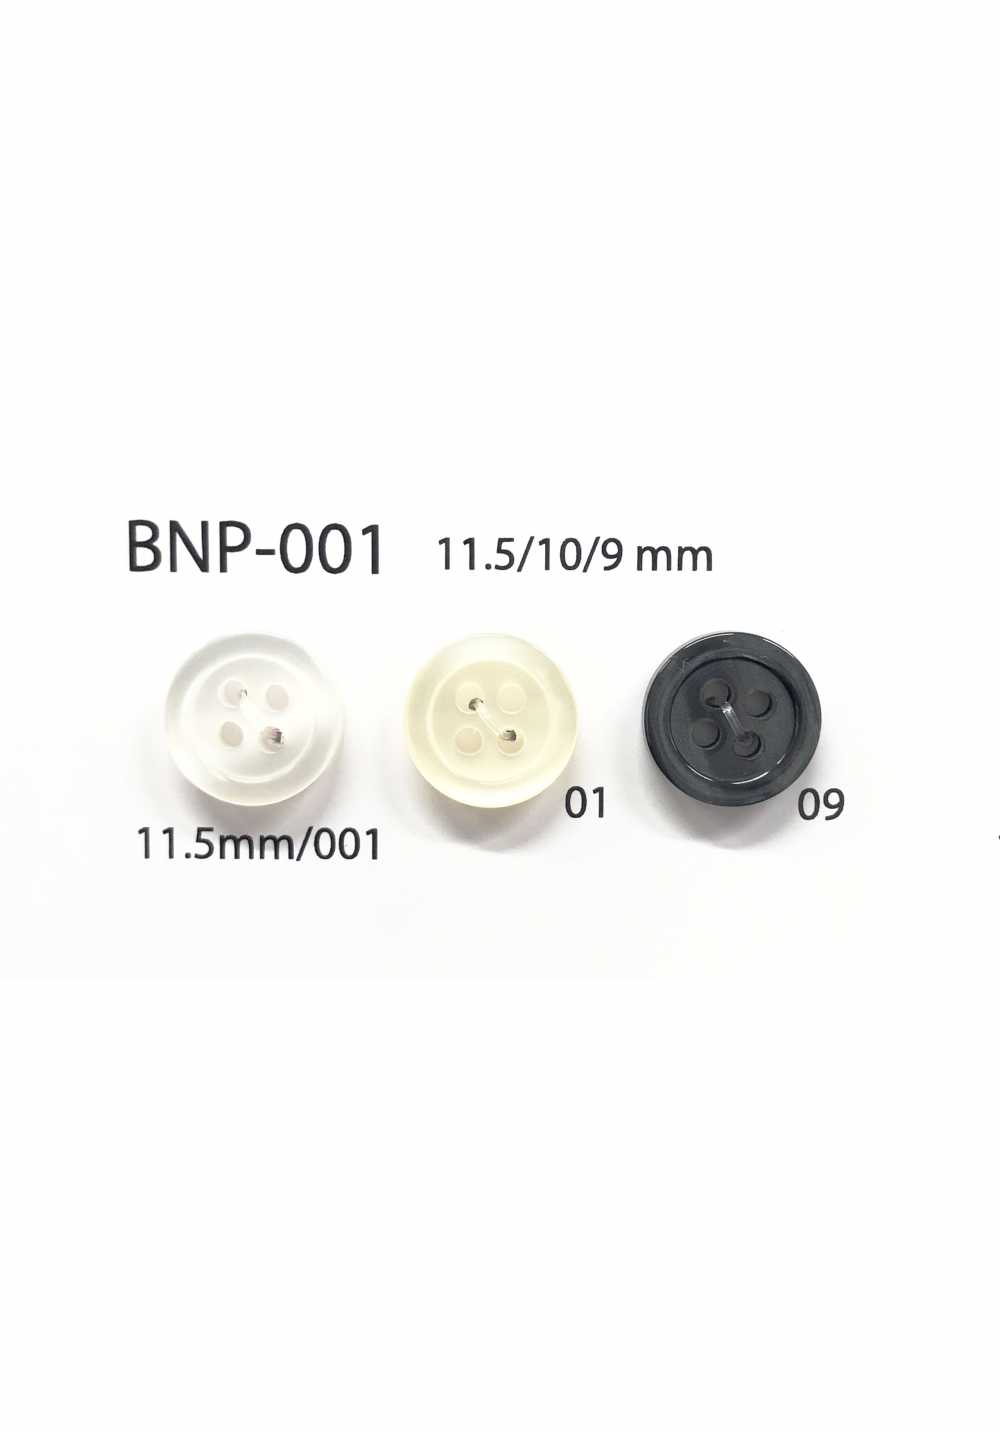 BNP-001 Biopolyester 4-hole Button IRIS